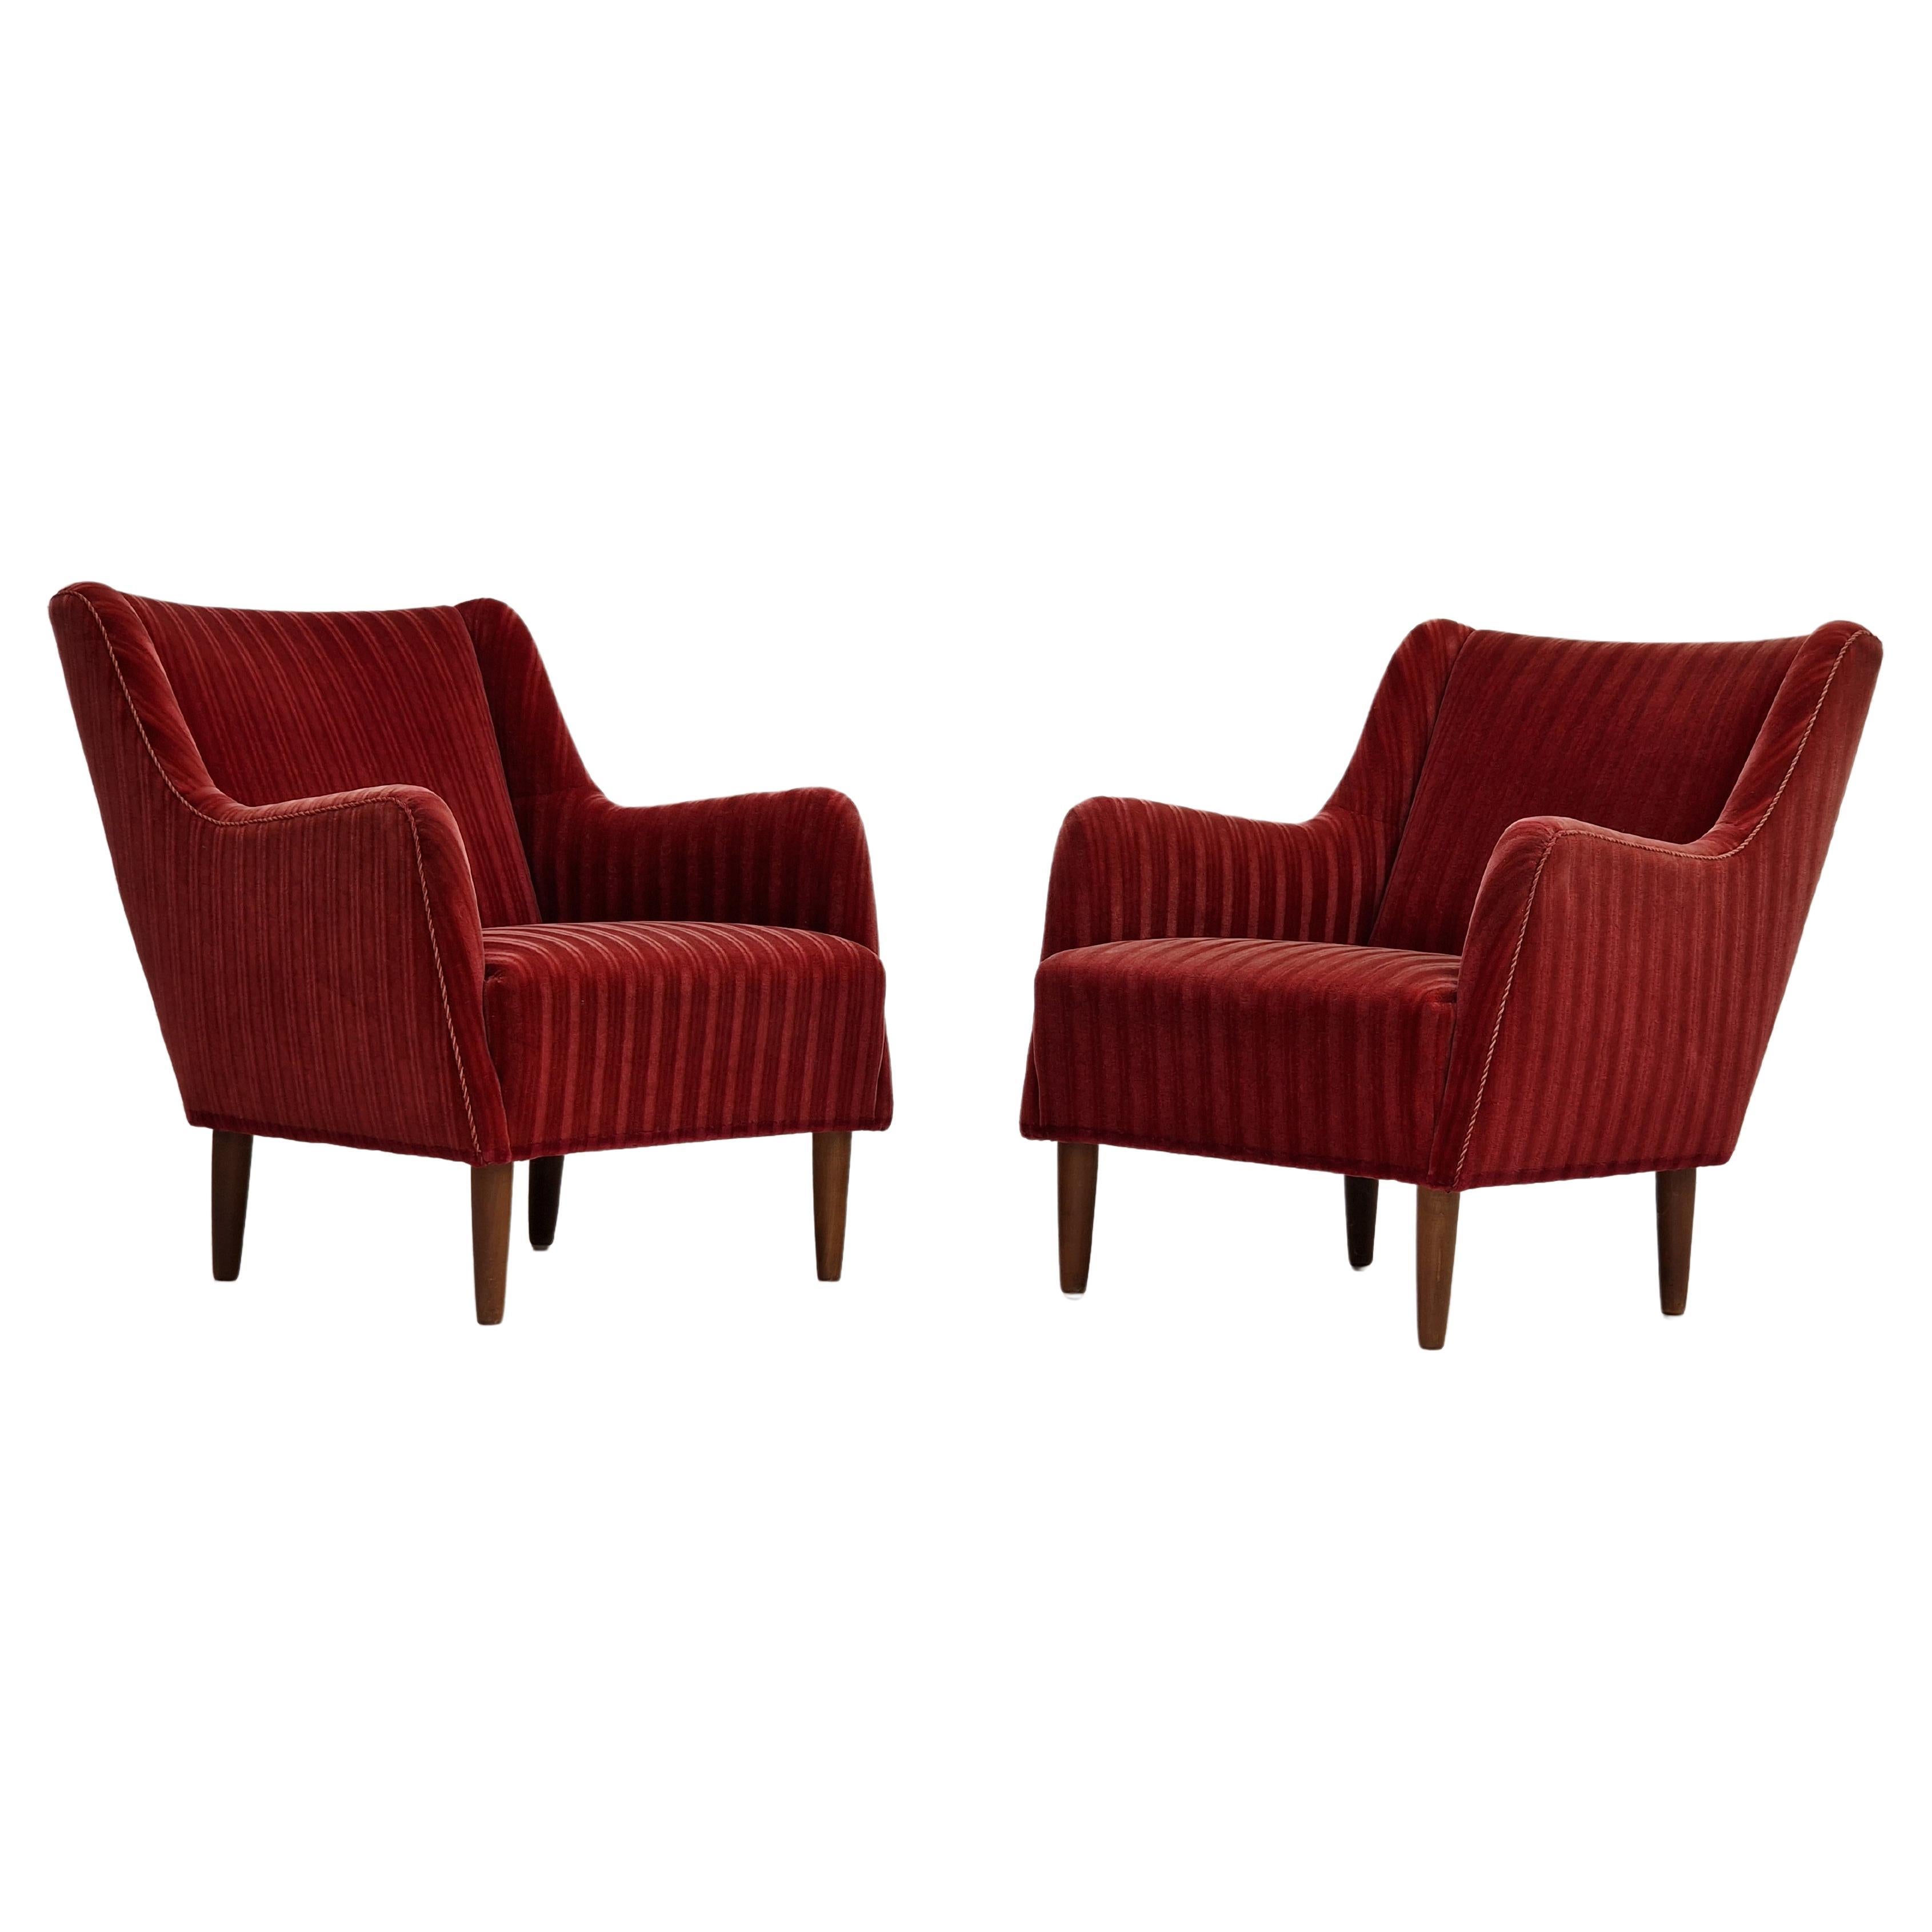 1960s, Danish Design, Set of 2 Armchairs, Velour, Original Very Good Condition For Sale